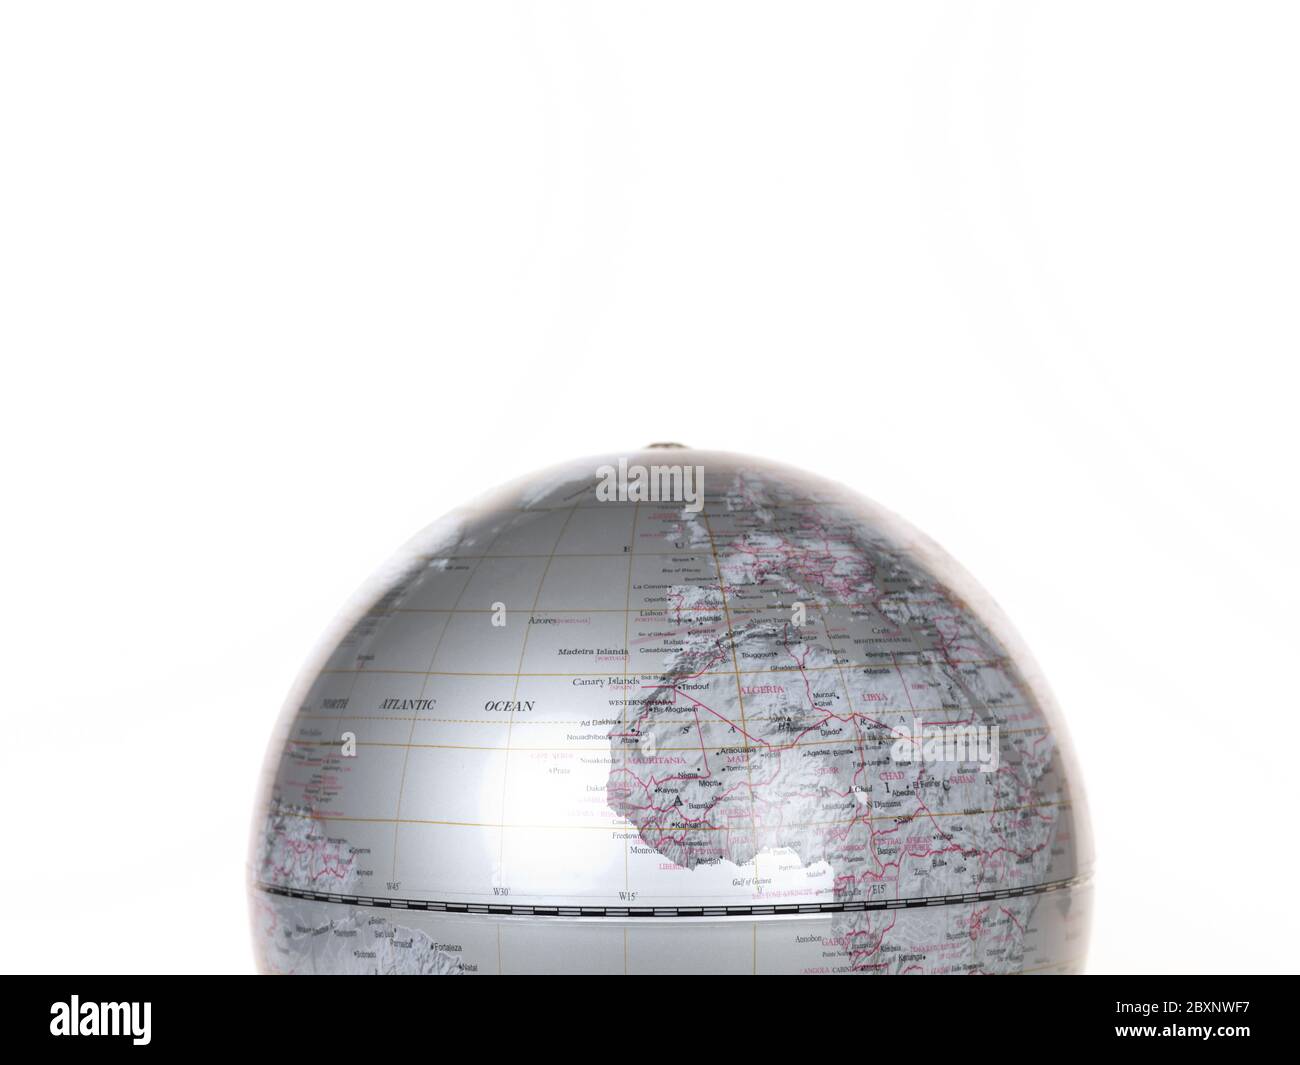 A world globe isolated aqainst a white background Stock Photo